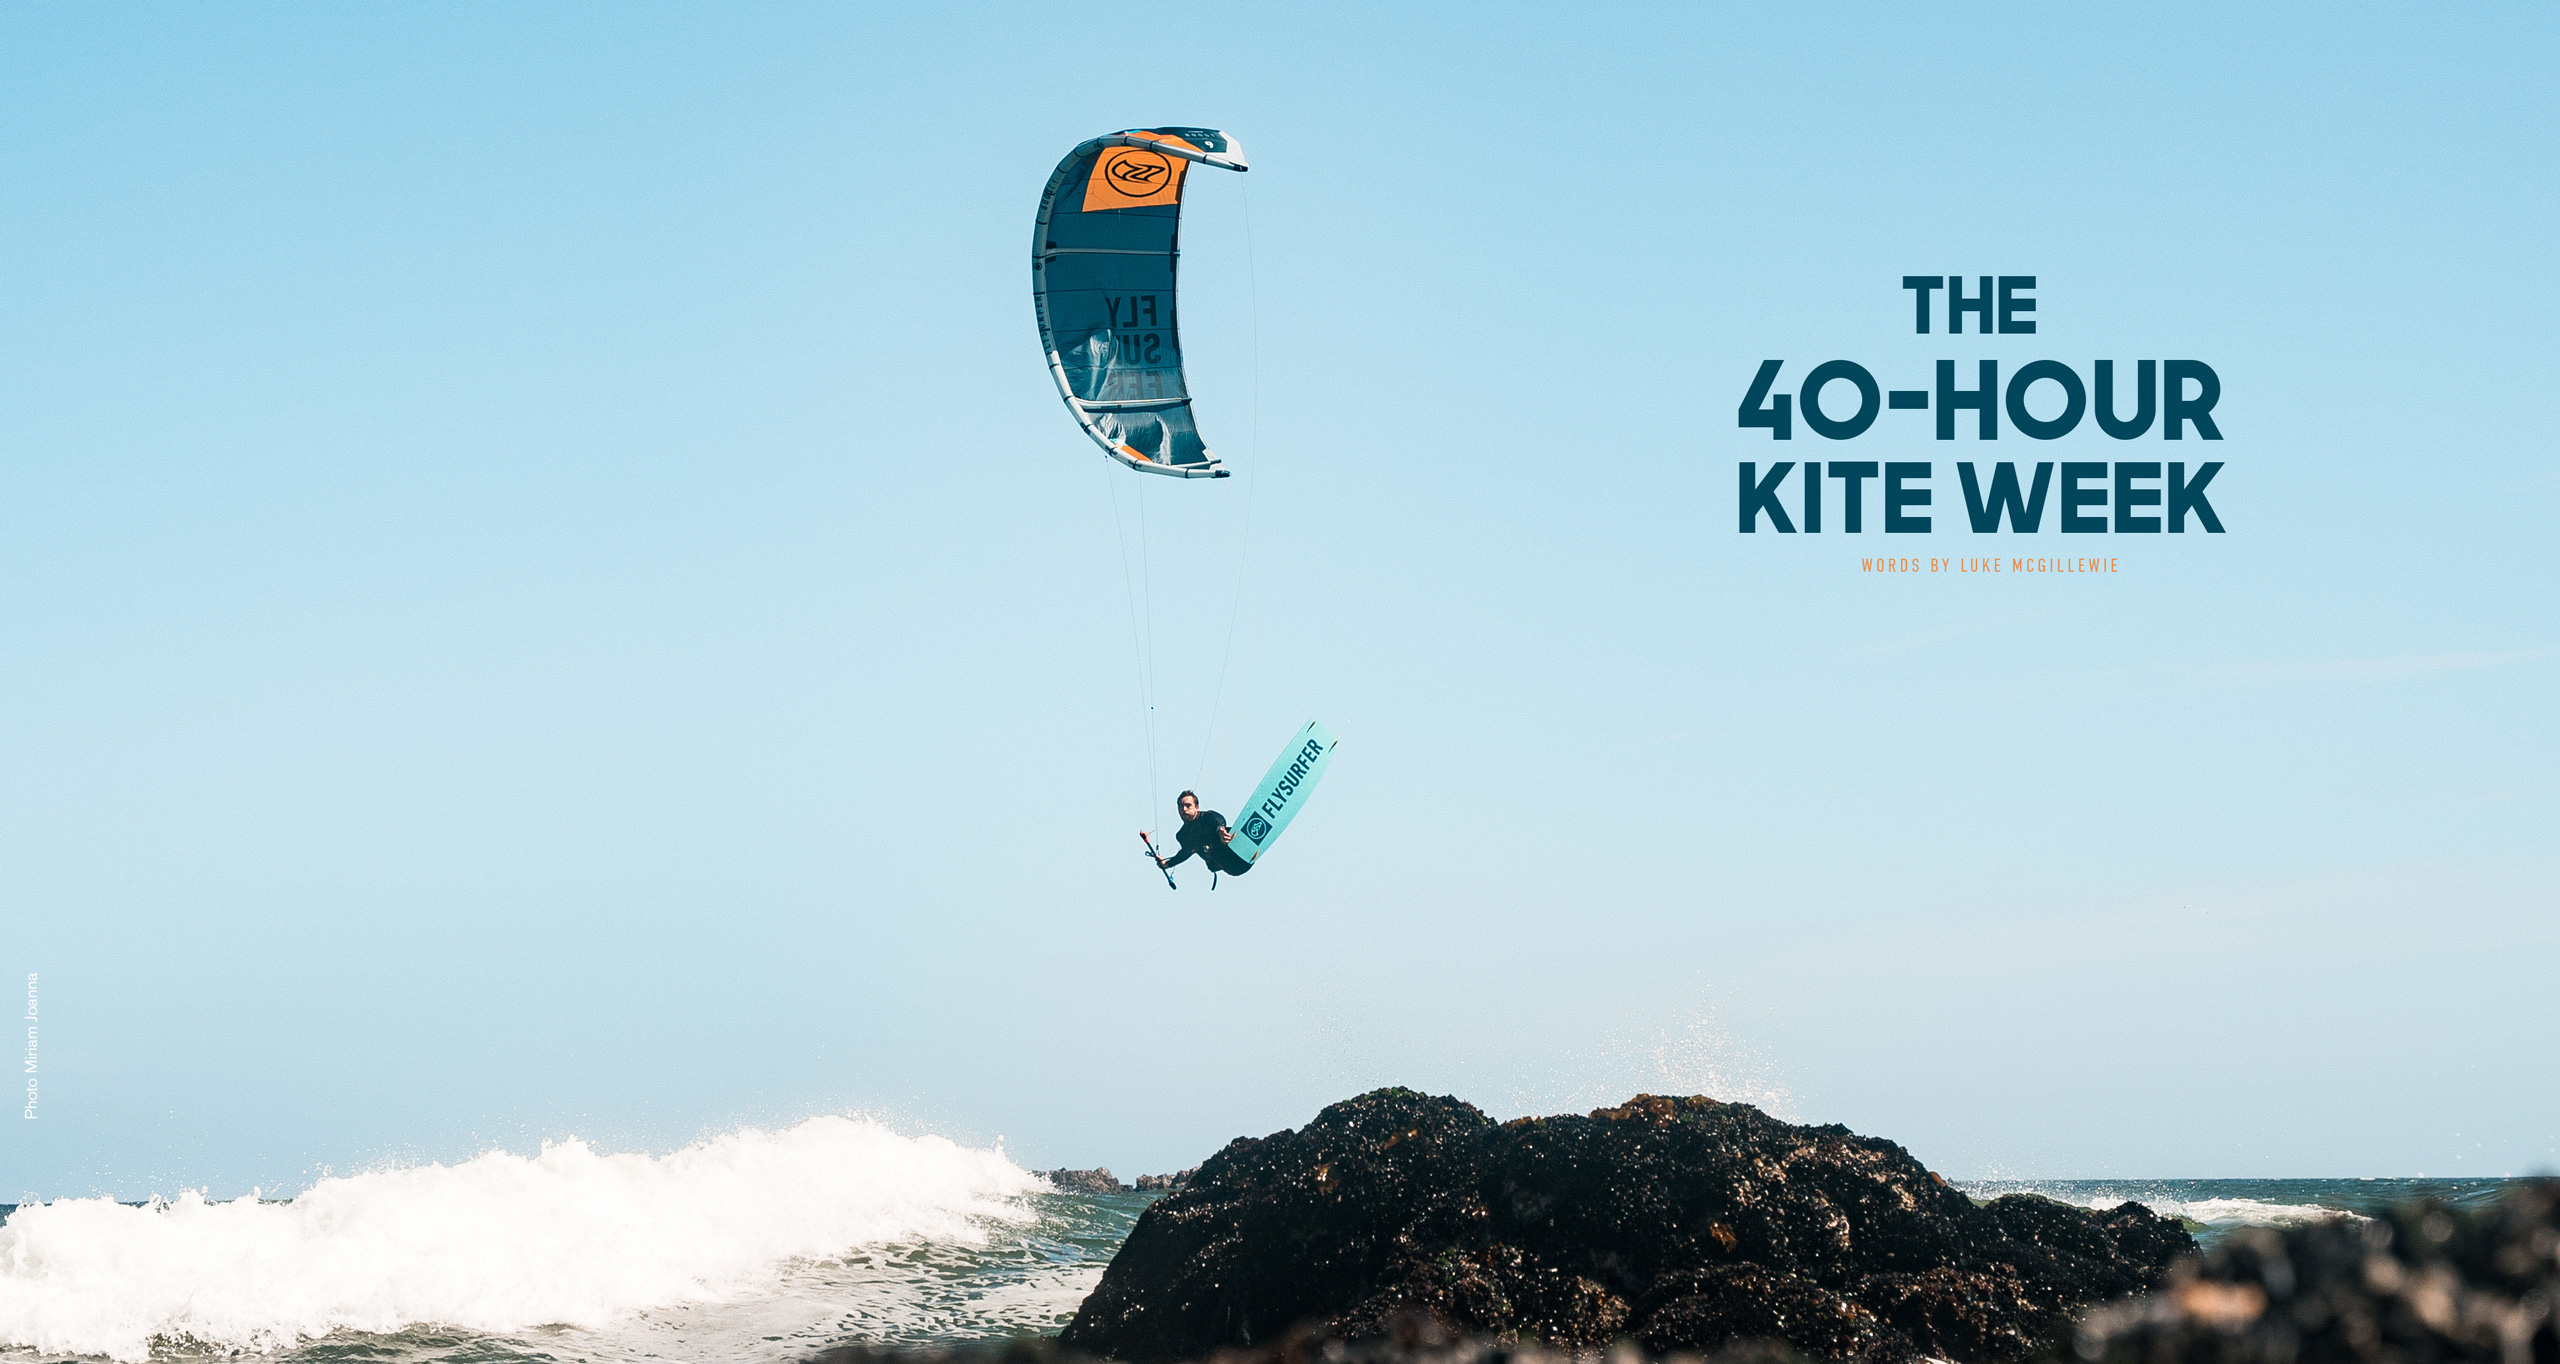 kiteinstructor – Just kitesurf